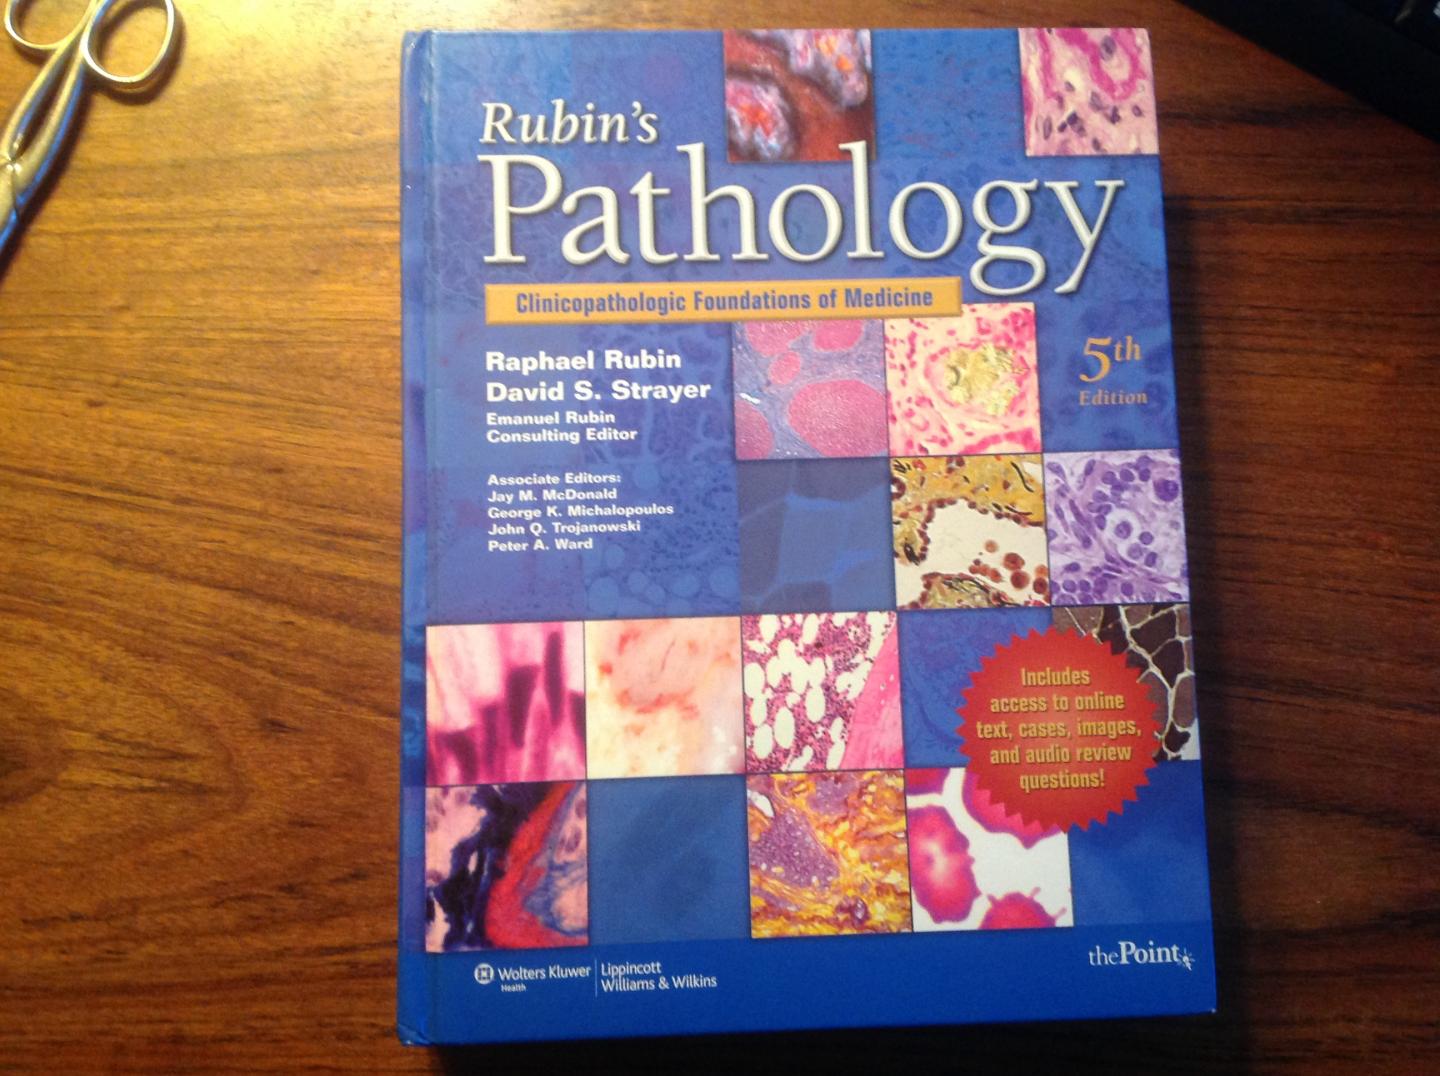 Raphael Rubin, David S. Strayer - Rubin's Pathology / Clinicopathologic Foundations of Medicine